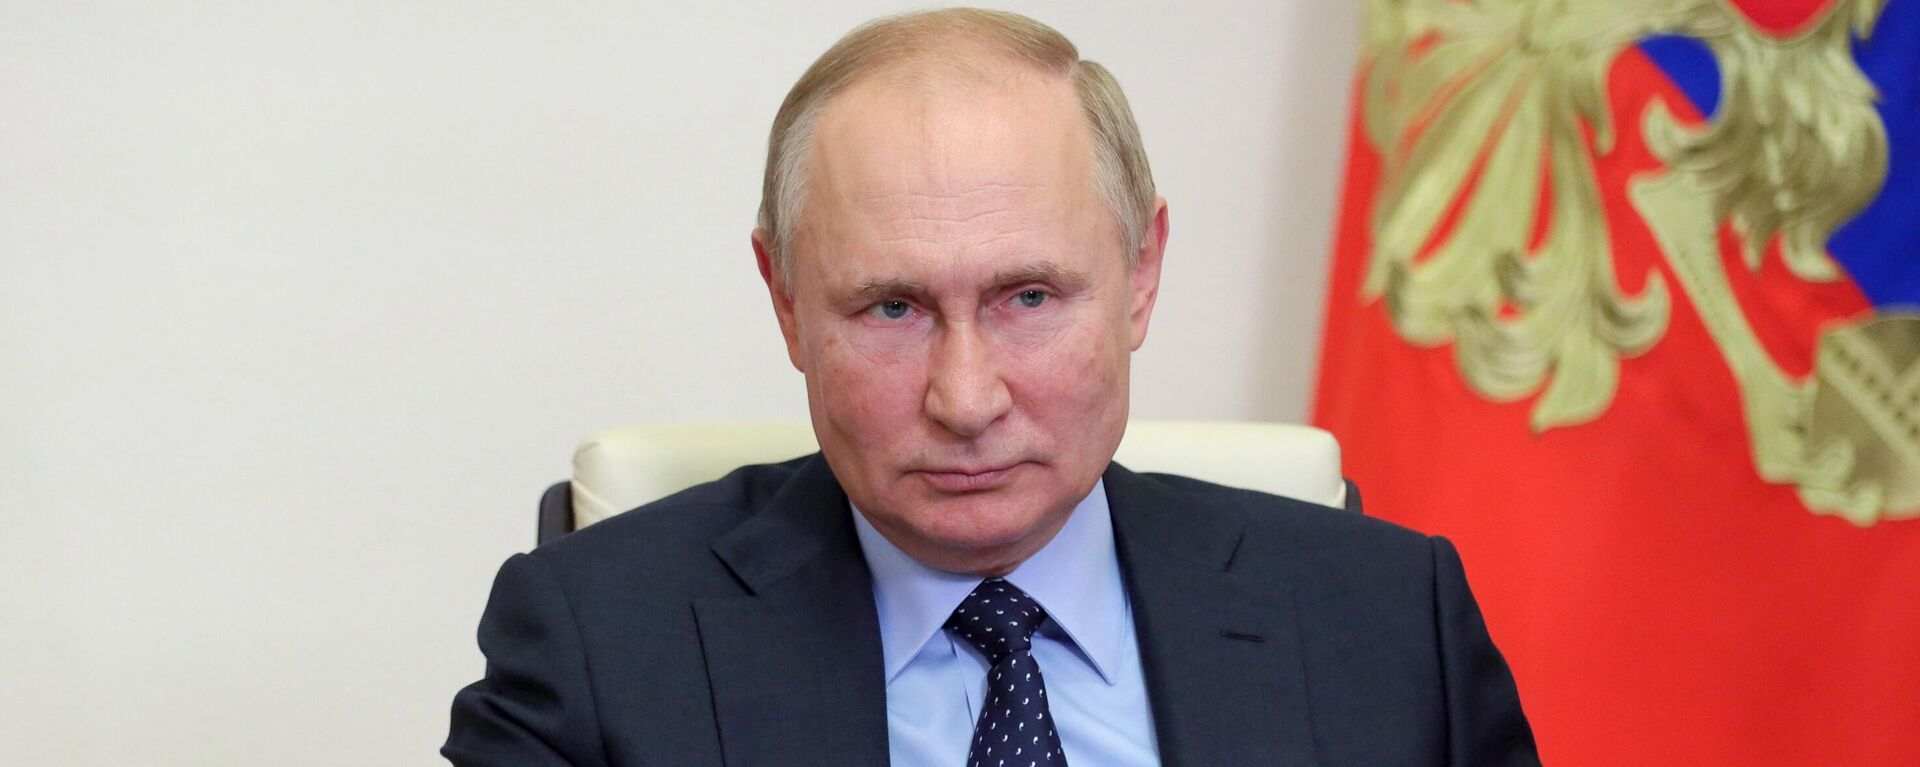 Predsednik Rusije Vladimir Putin - Sputnik Srbija, 1920, 07.10.2021